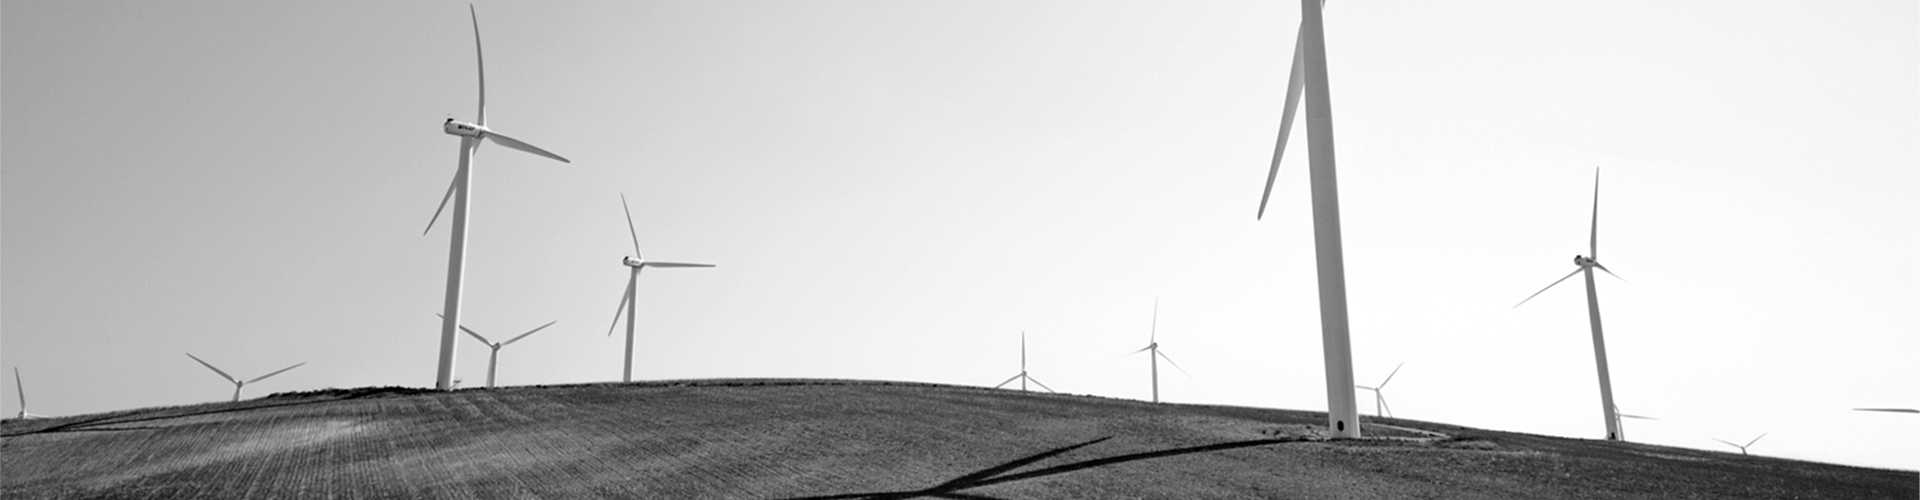  Wind Turbine Helical Foundations